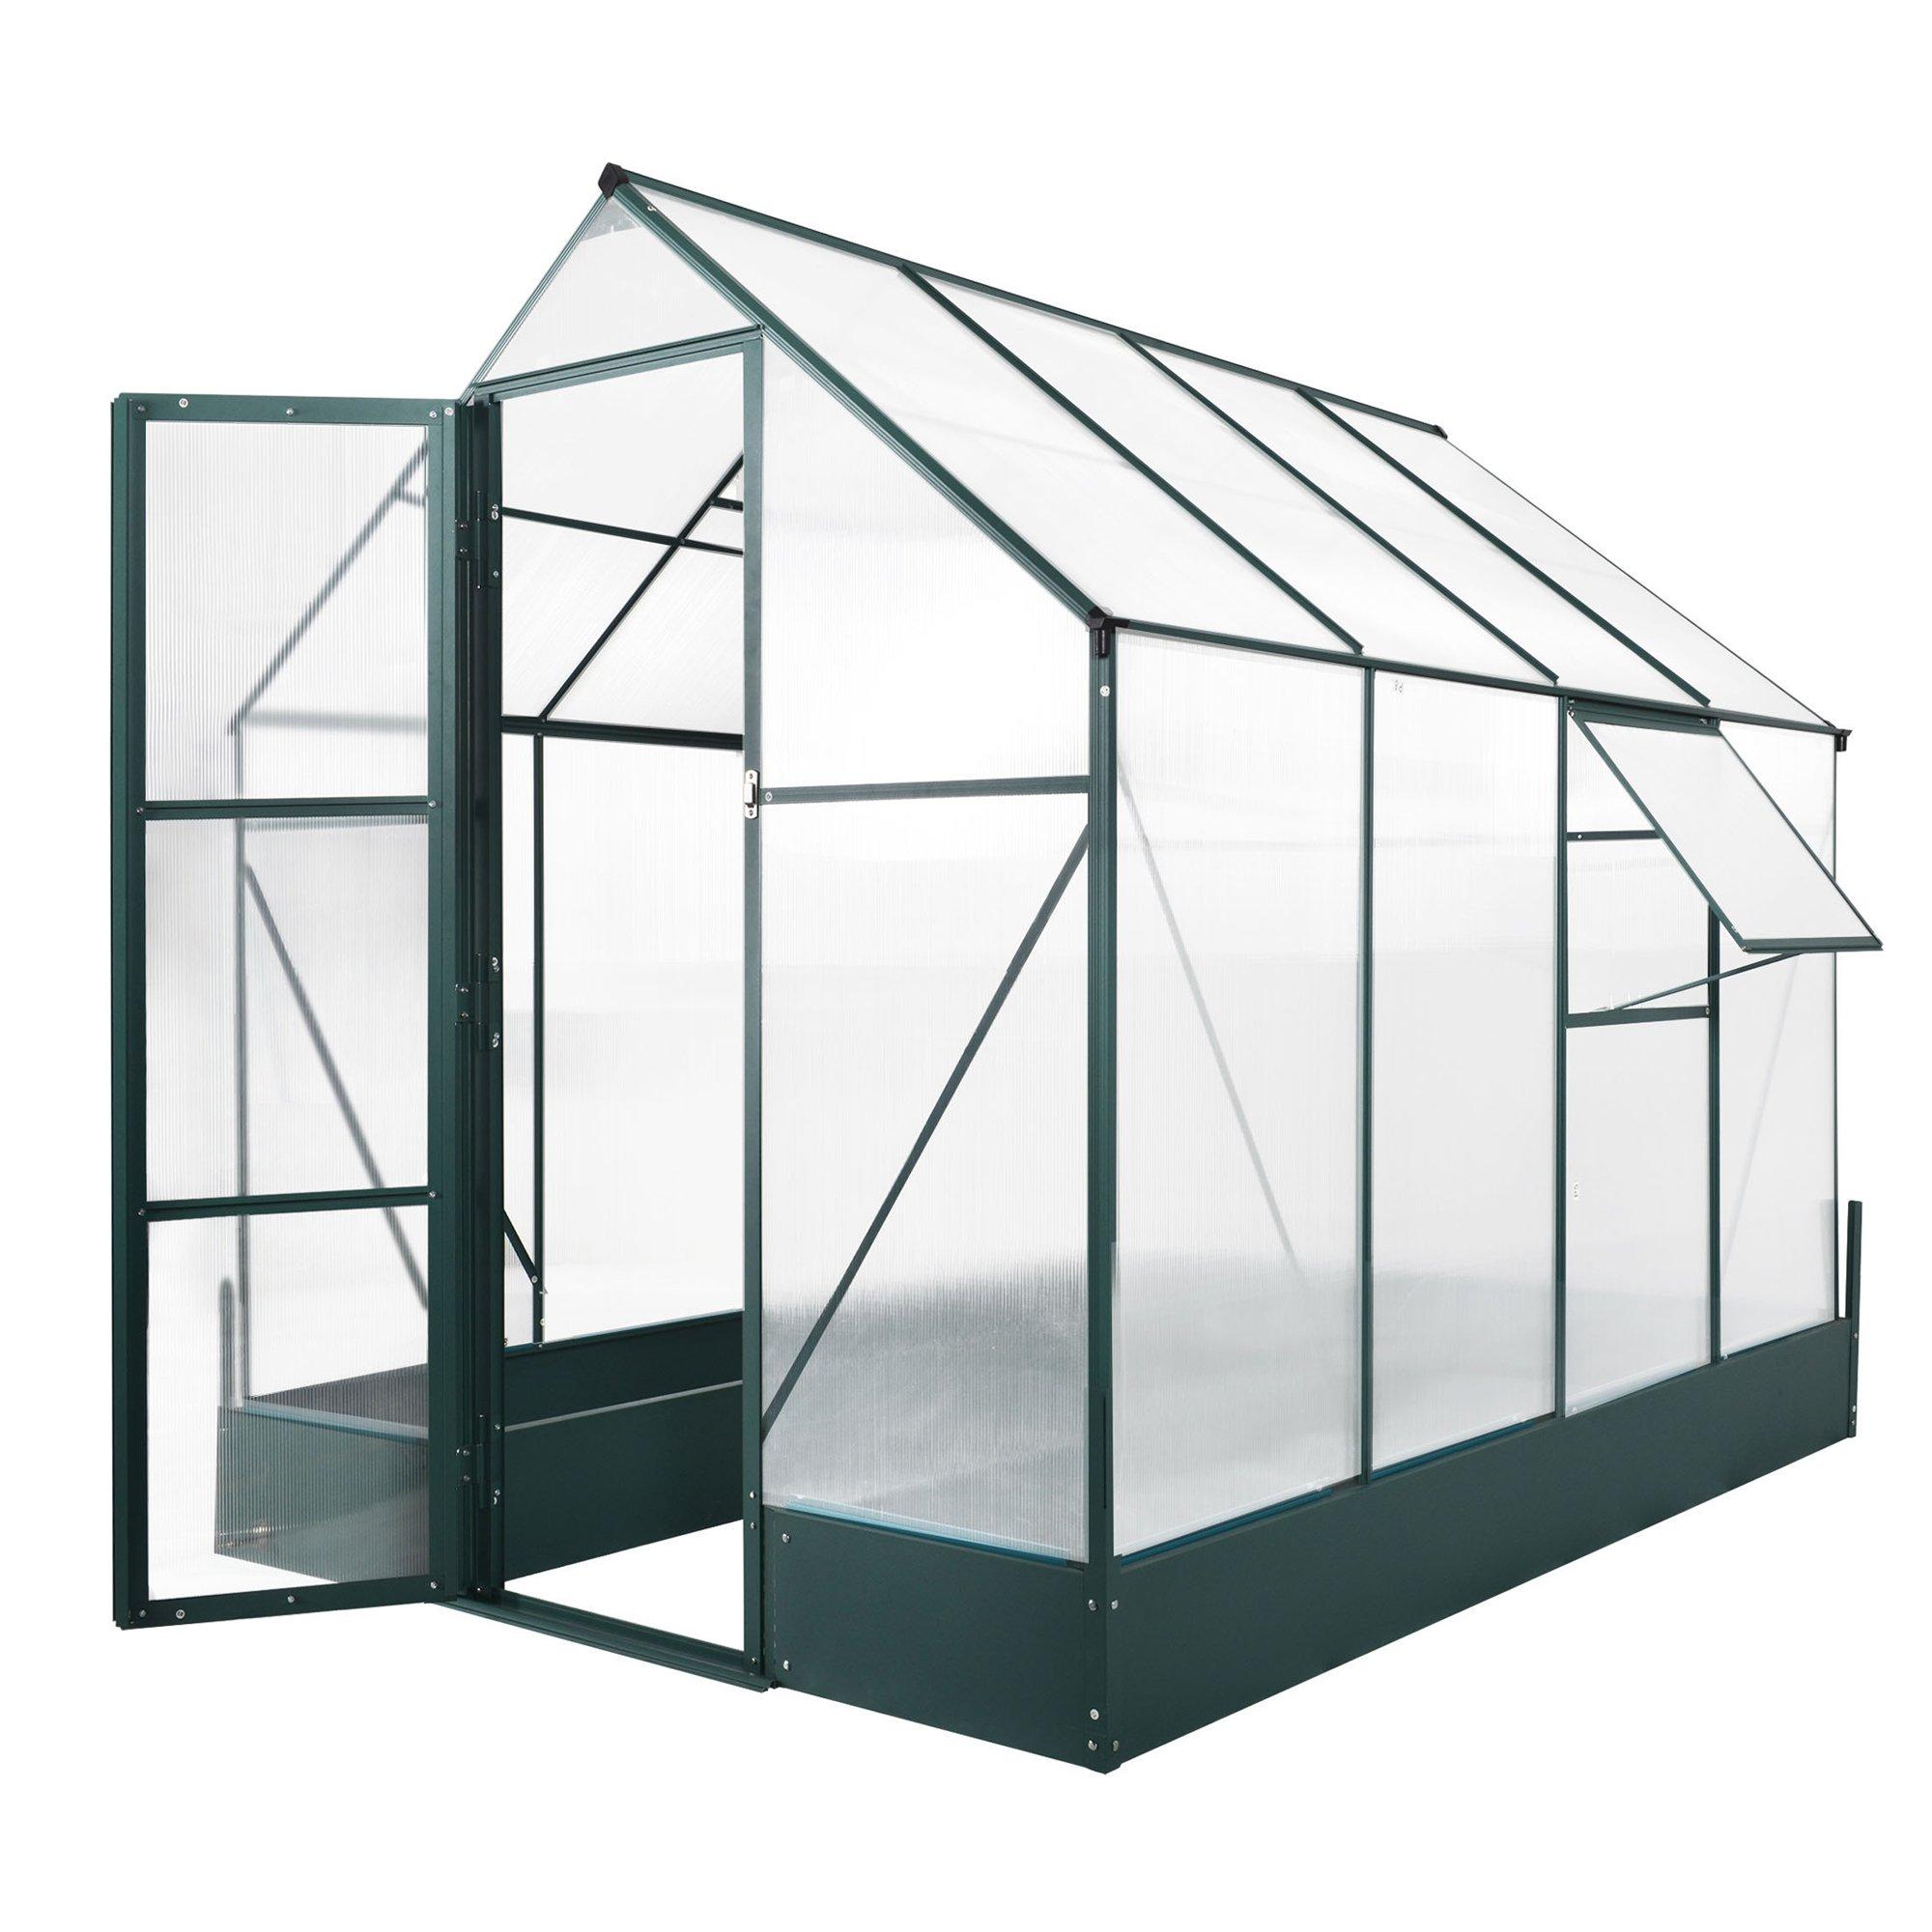 Walk-in Greenhouse Garden Polycarbonate Aluminium with Smart Window